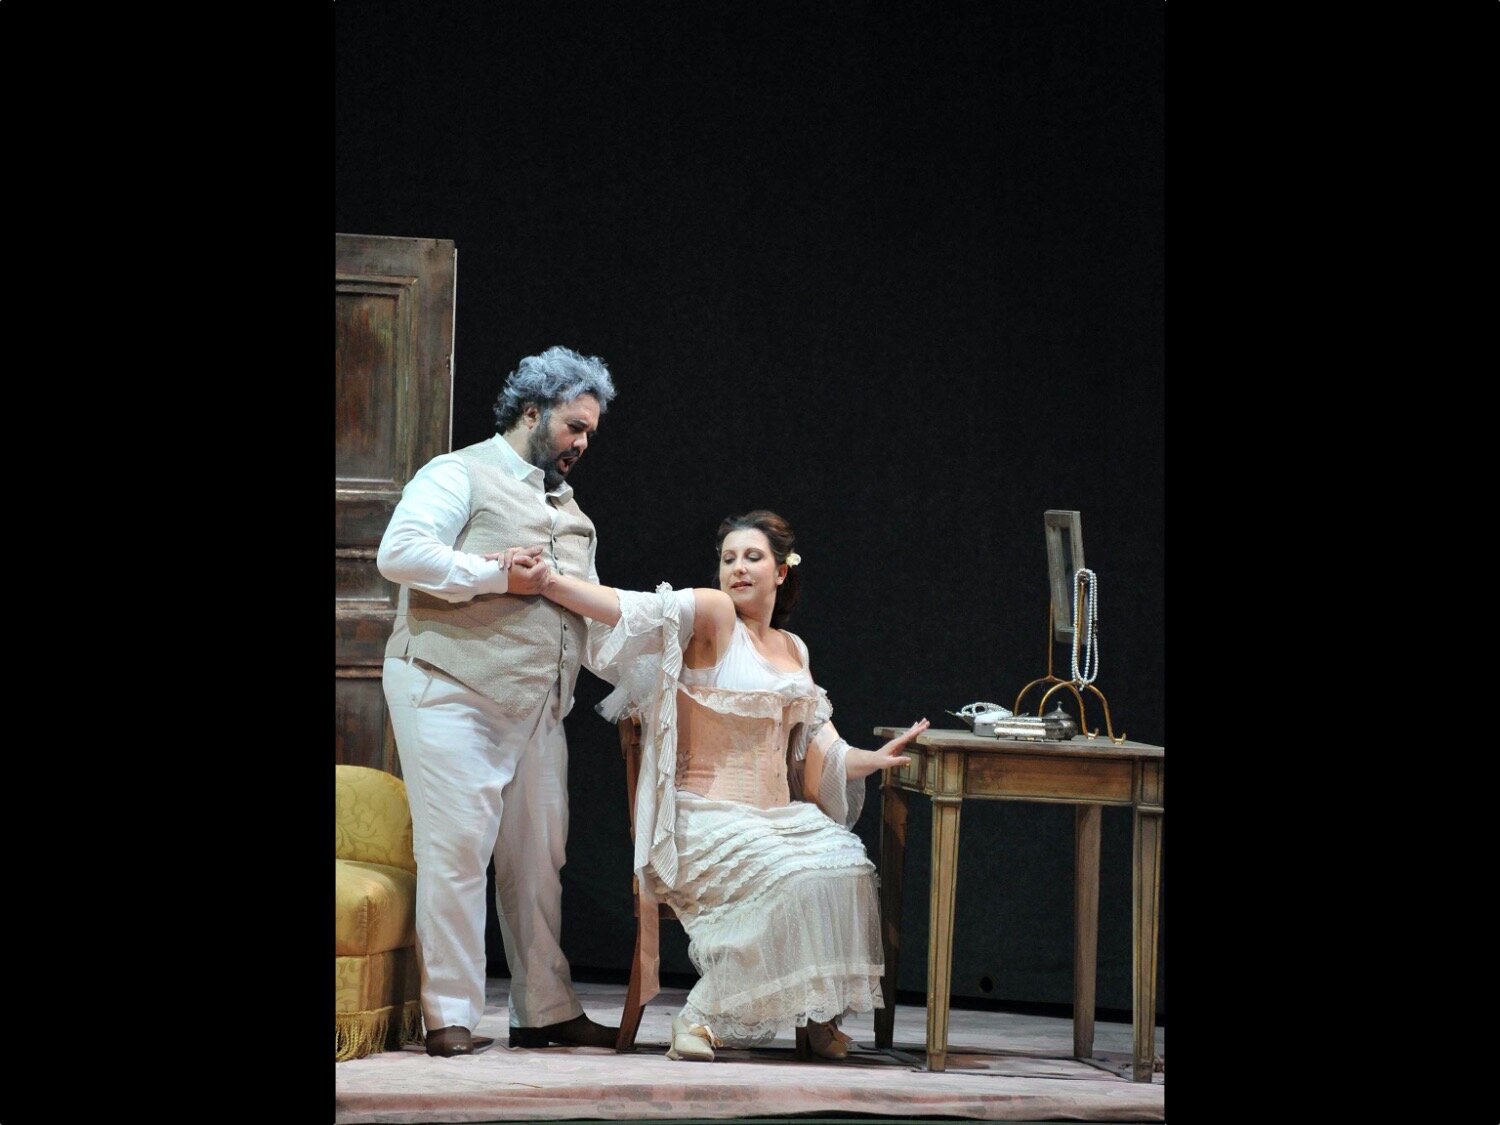  Falstaff
Teatro Petruzzelli
Bari, 2013
(photo courtesy of Teatro Petruzzelli) 